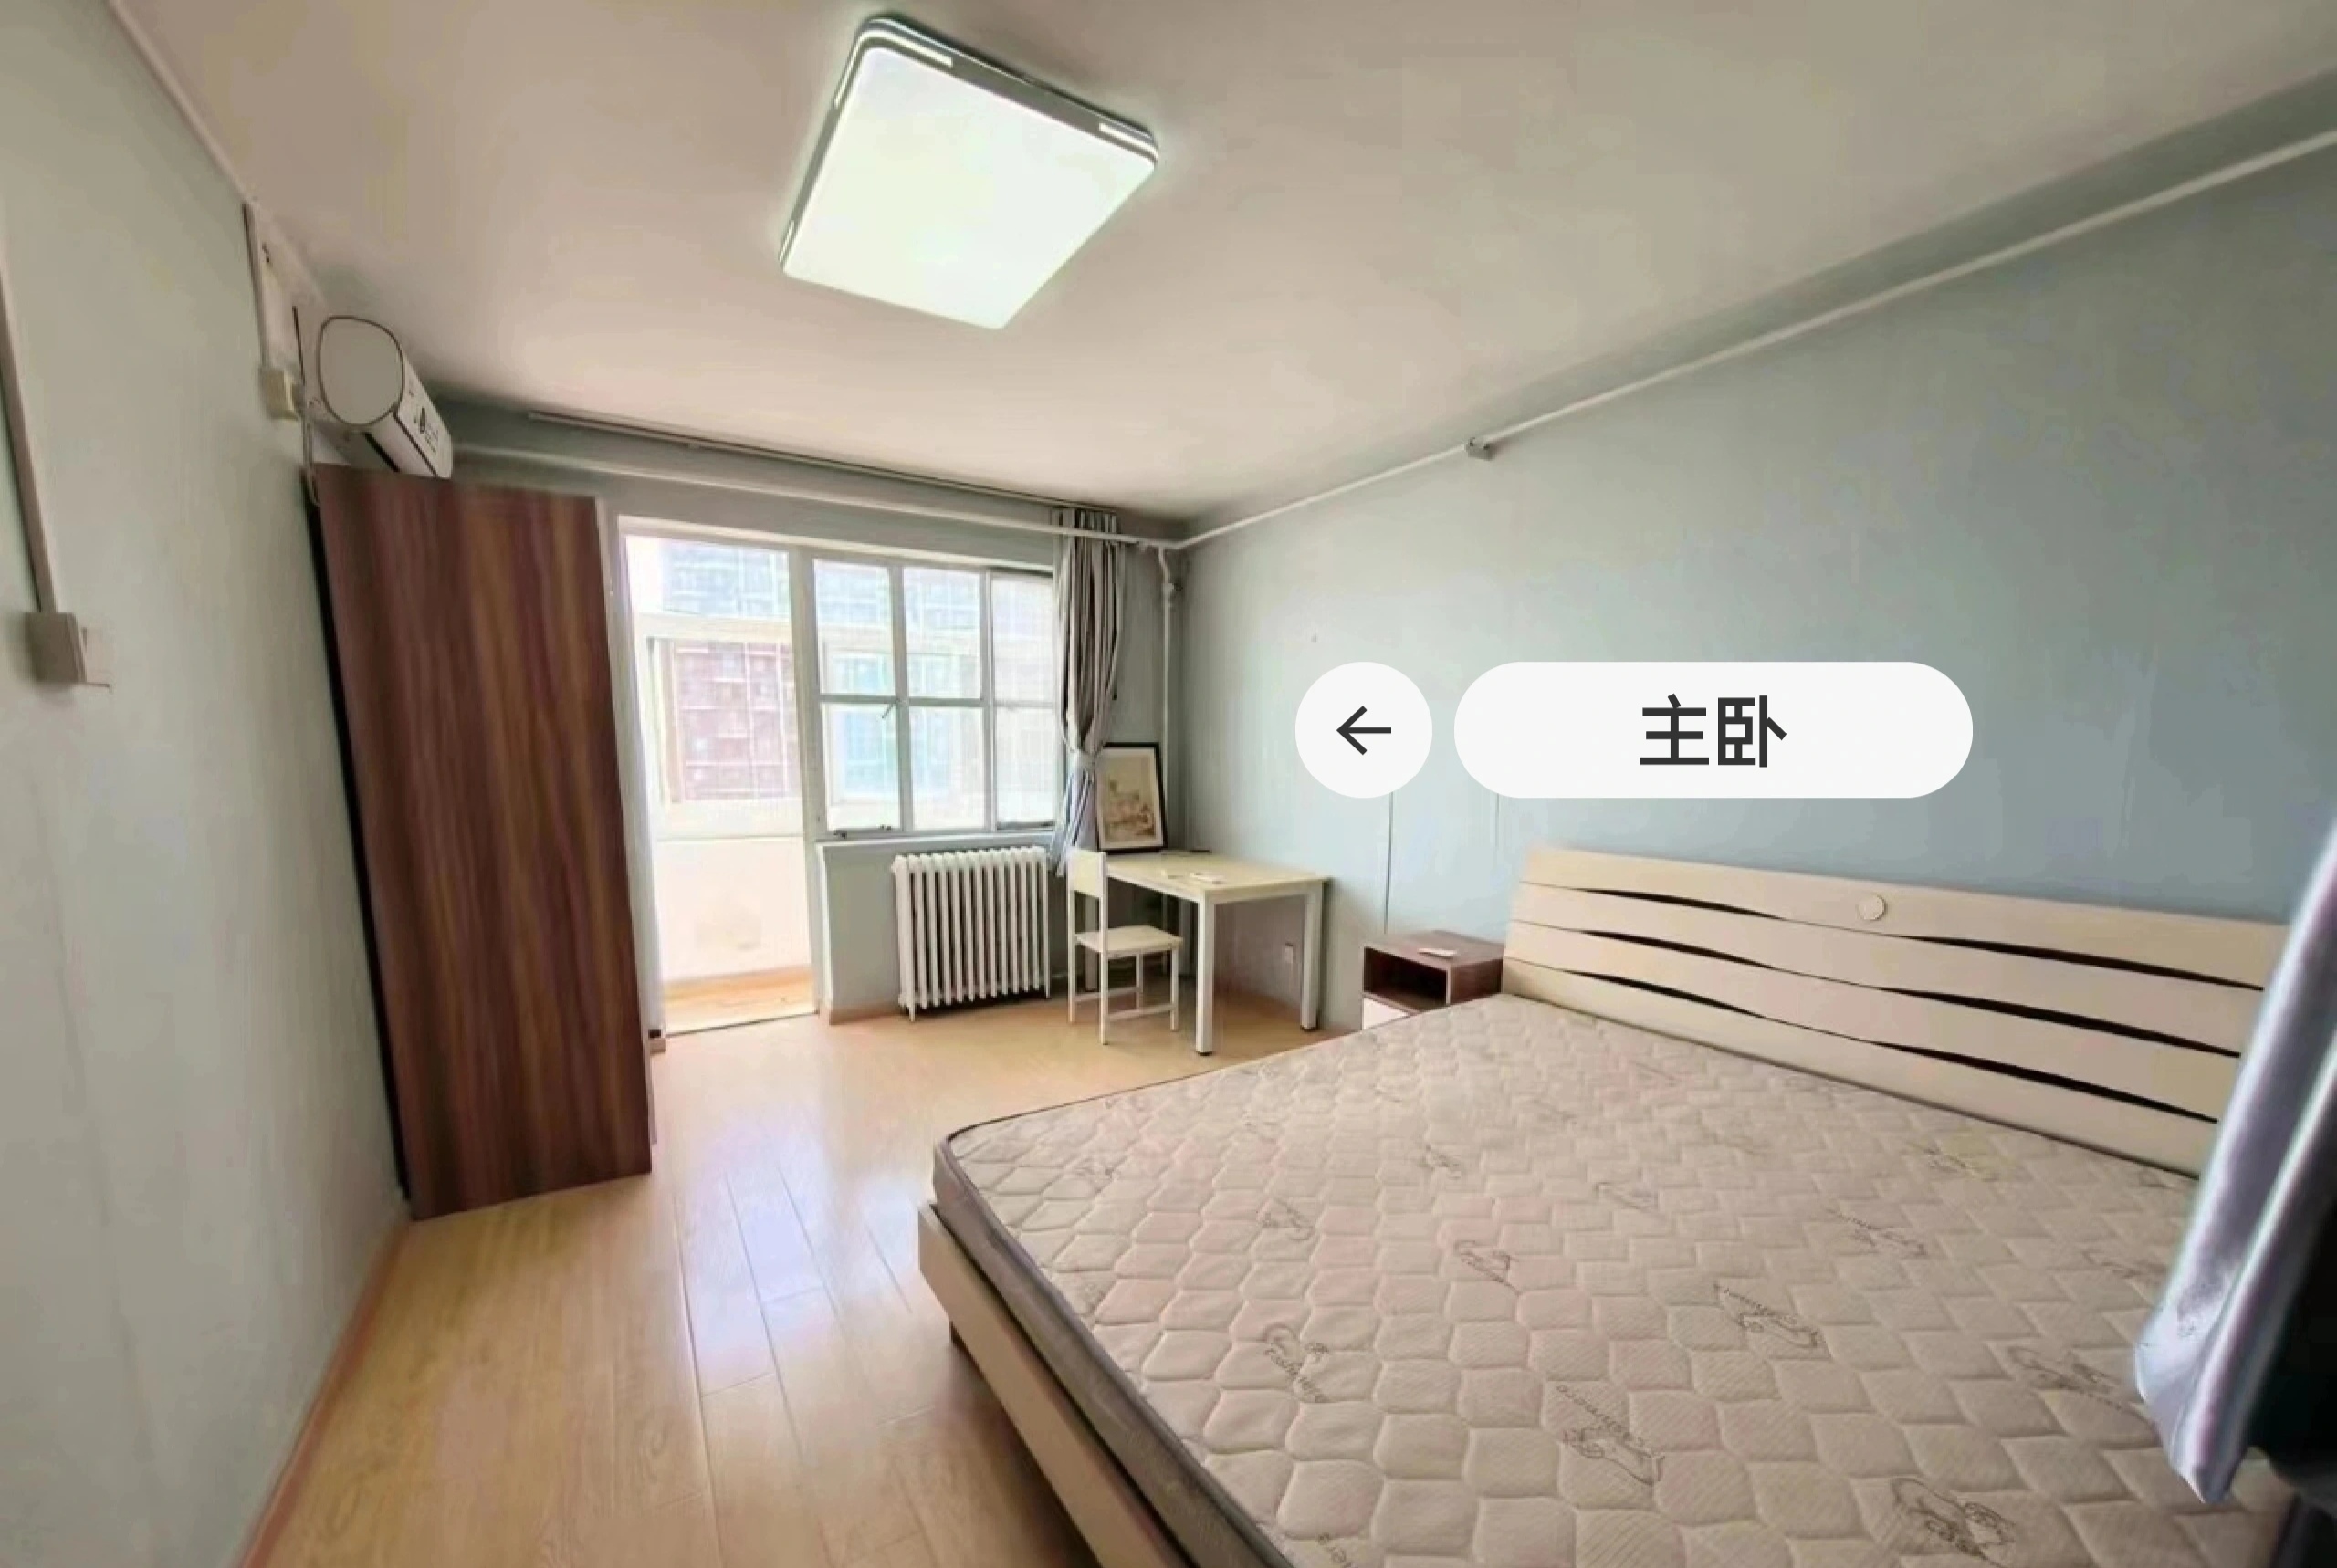 Beijing-Chaoyang-Cozy Home,Clean&Comfy,No Gender Limit,Hustle & Bustle,“Friends”,Chilled,Pet Friendly